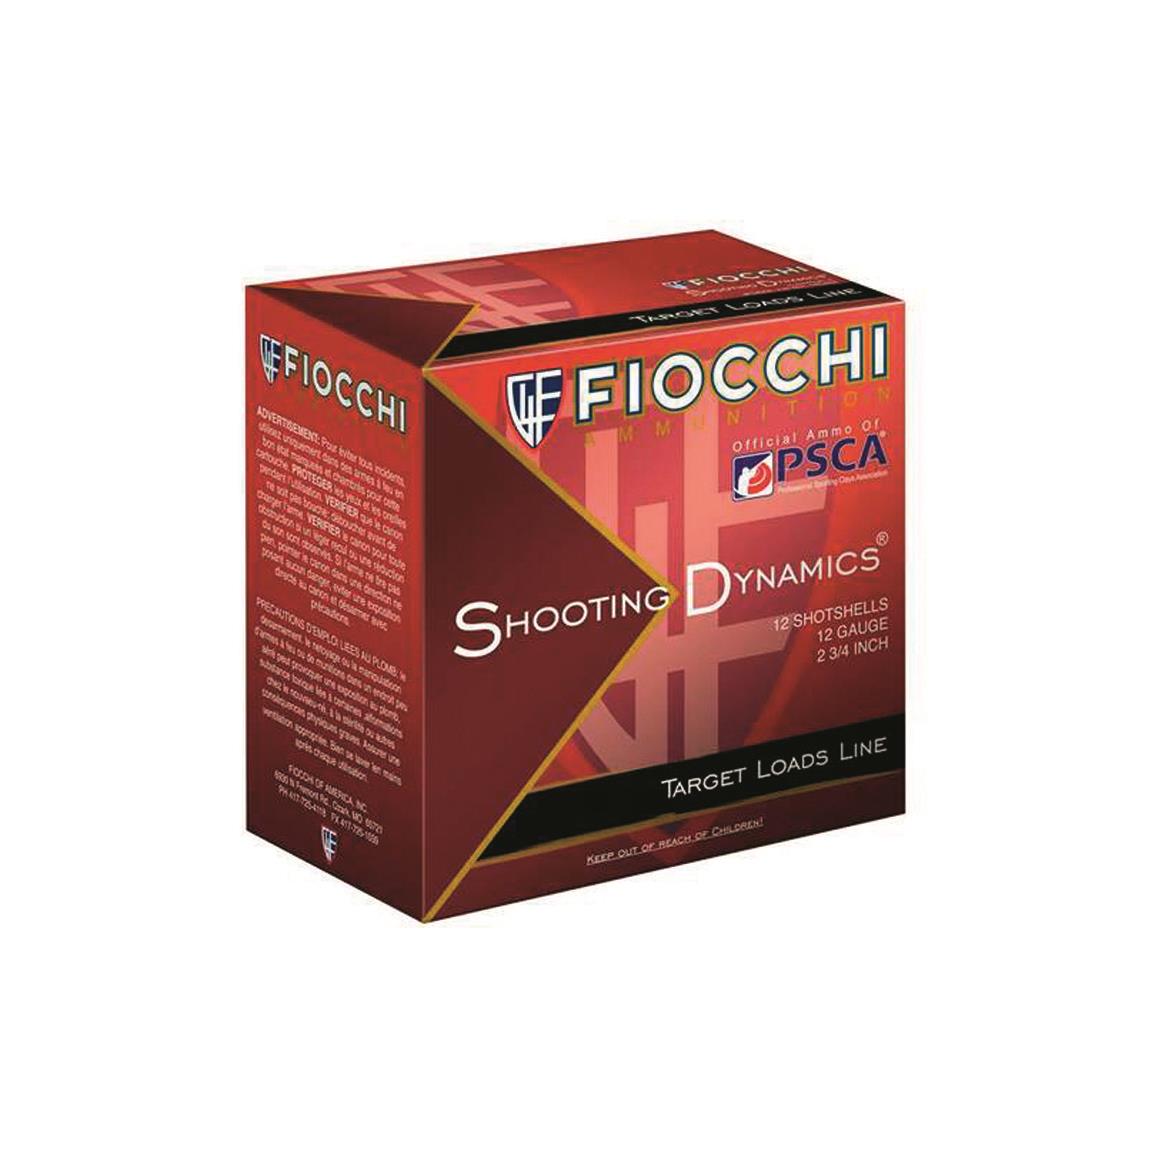 Fiocchi Shooting Dynamics, 20 Gauge Target Loads, 2 3/4",  7/8 oz., 250 Rounds